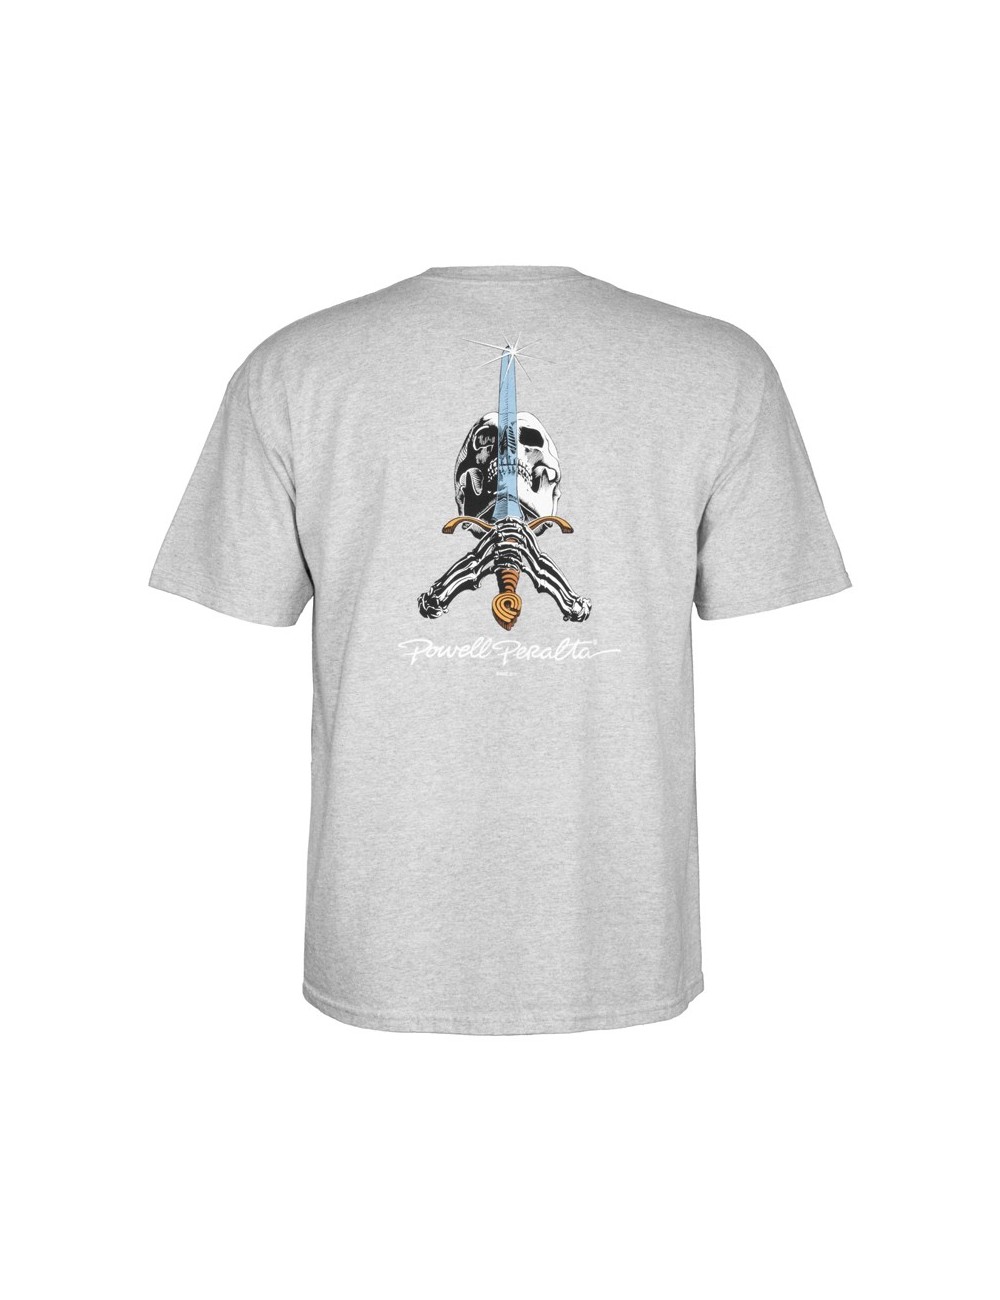 Powell Peralta Skull & Sword Gray (Camiseta)